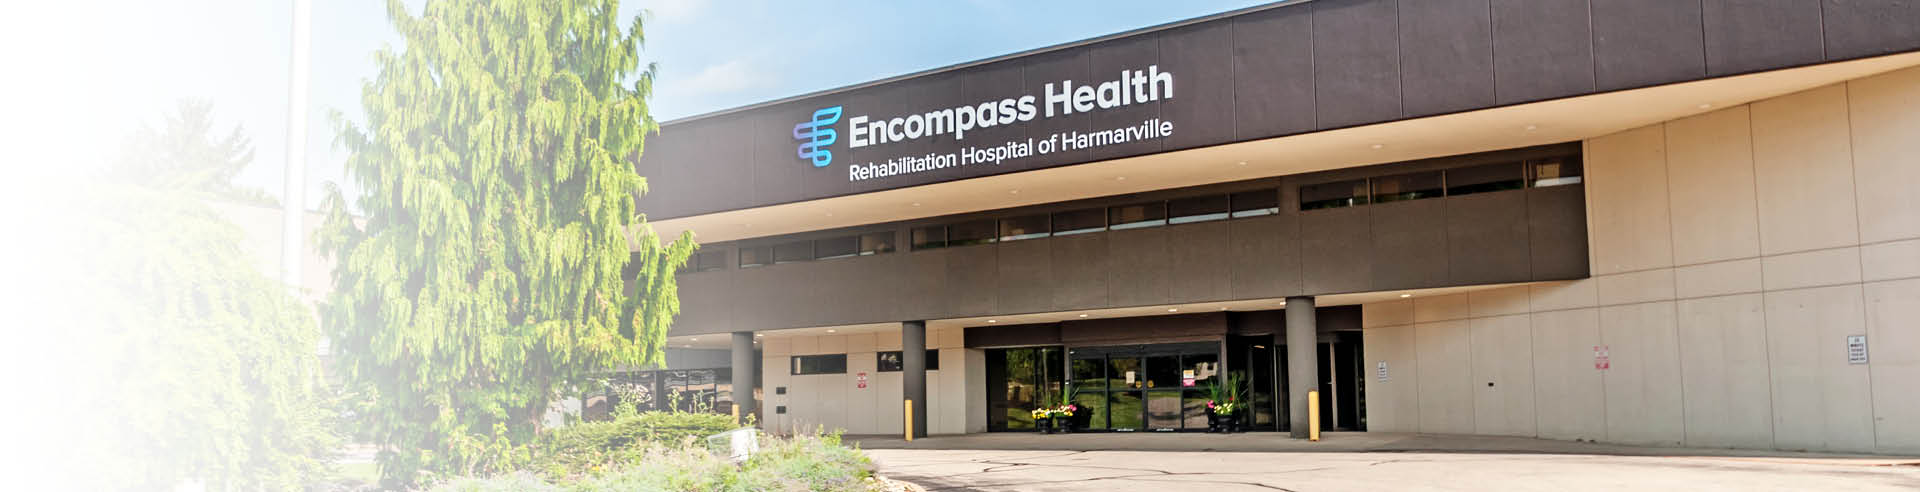 Encompass Health Rehabilitation Hospital of Harmarville exterior